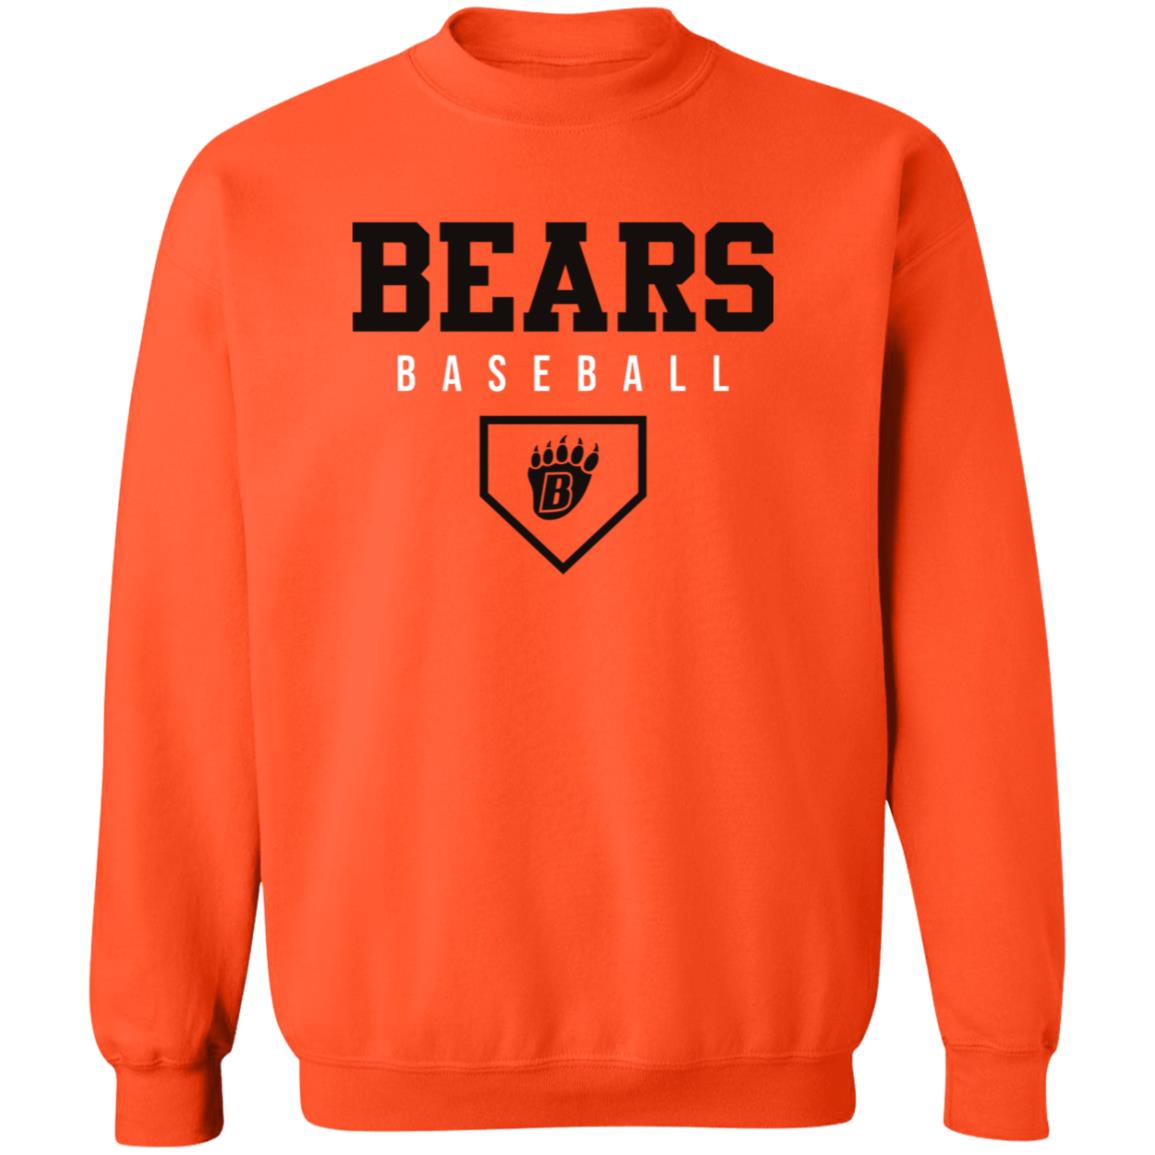 WBLHSB Bears Baseball Crewneck Pullover Sweatshirt